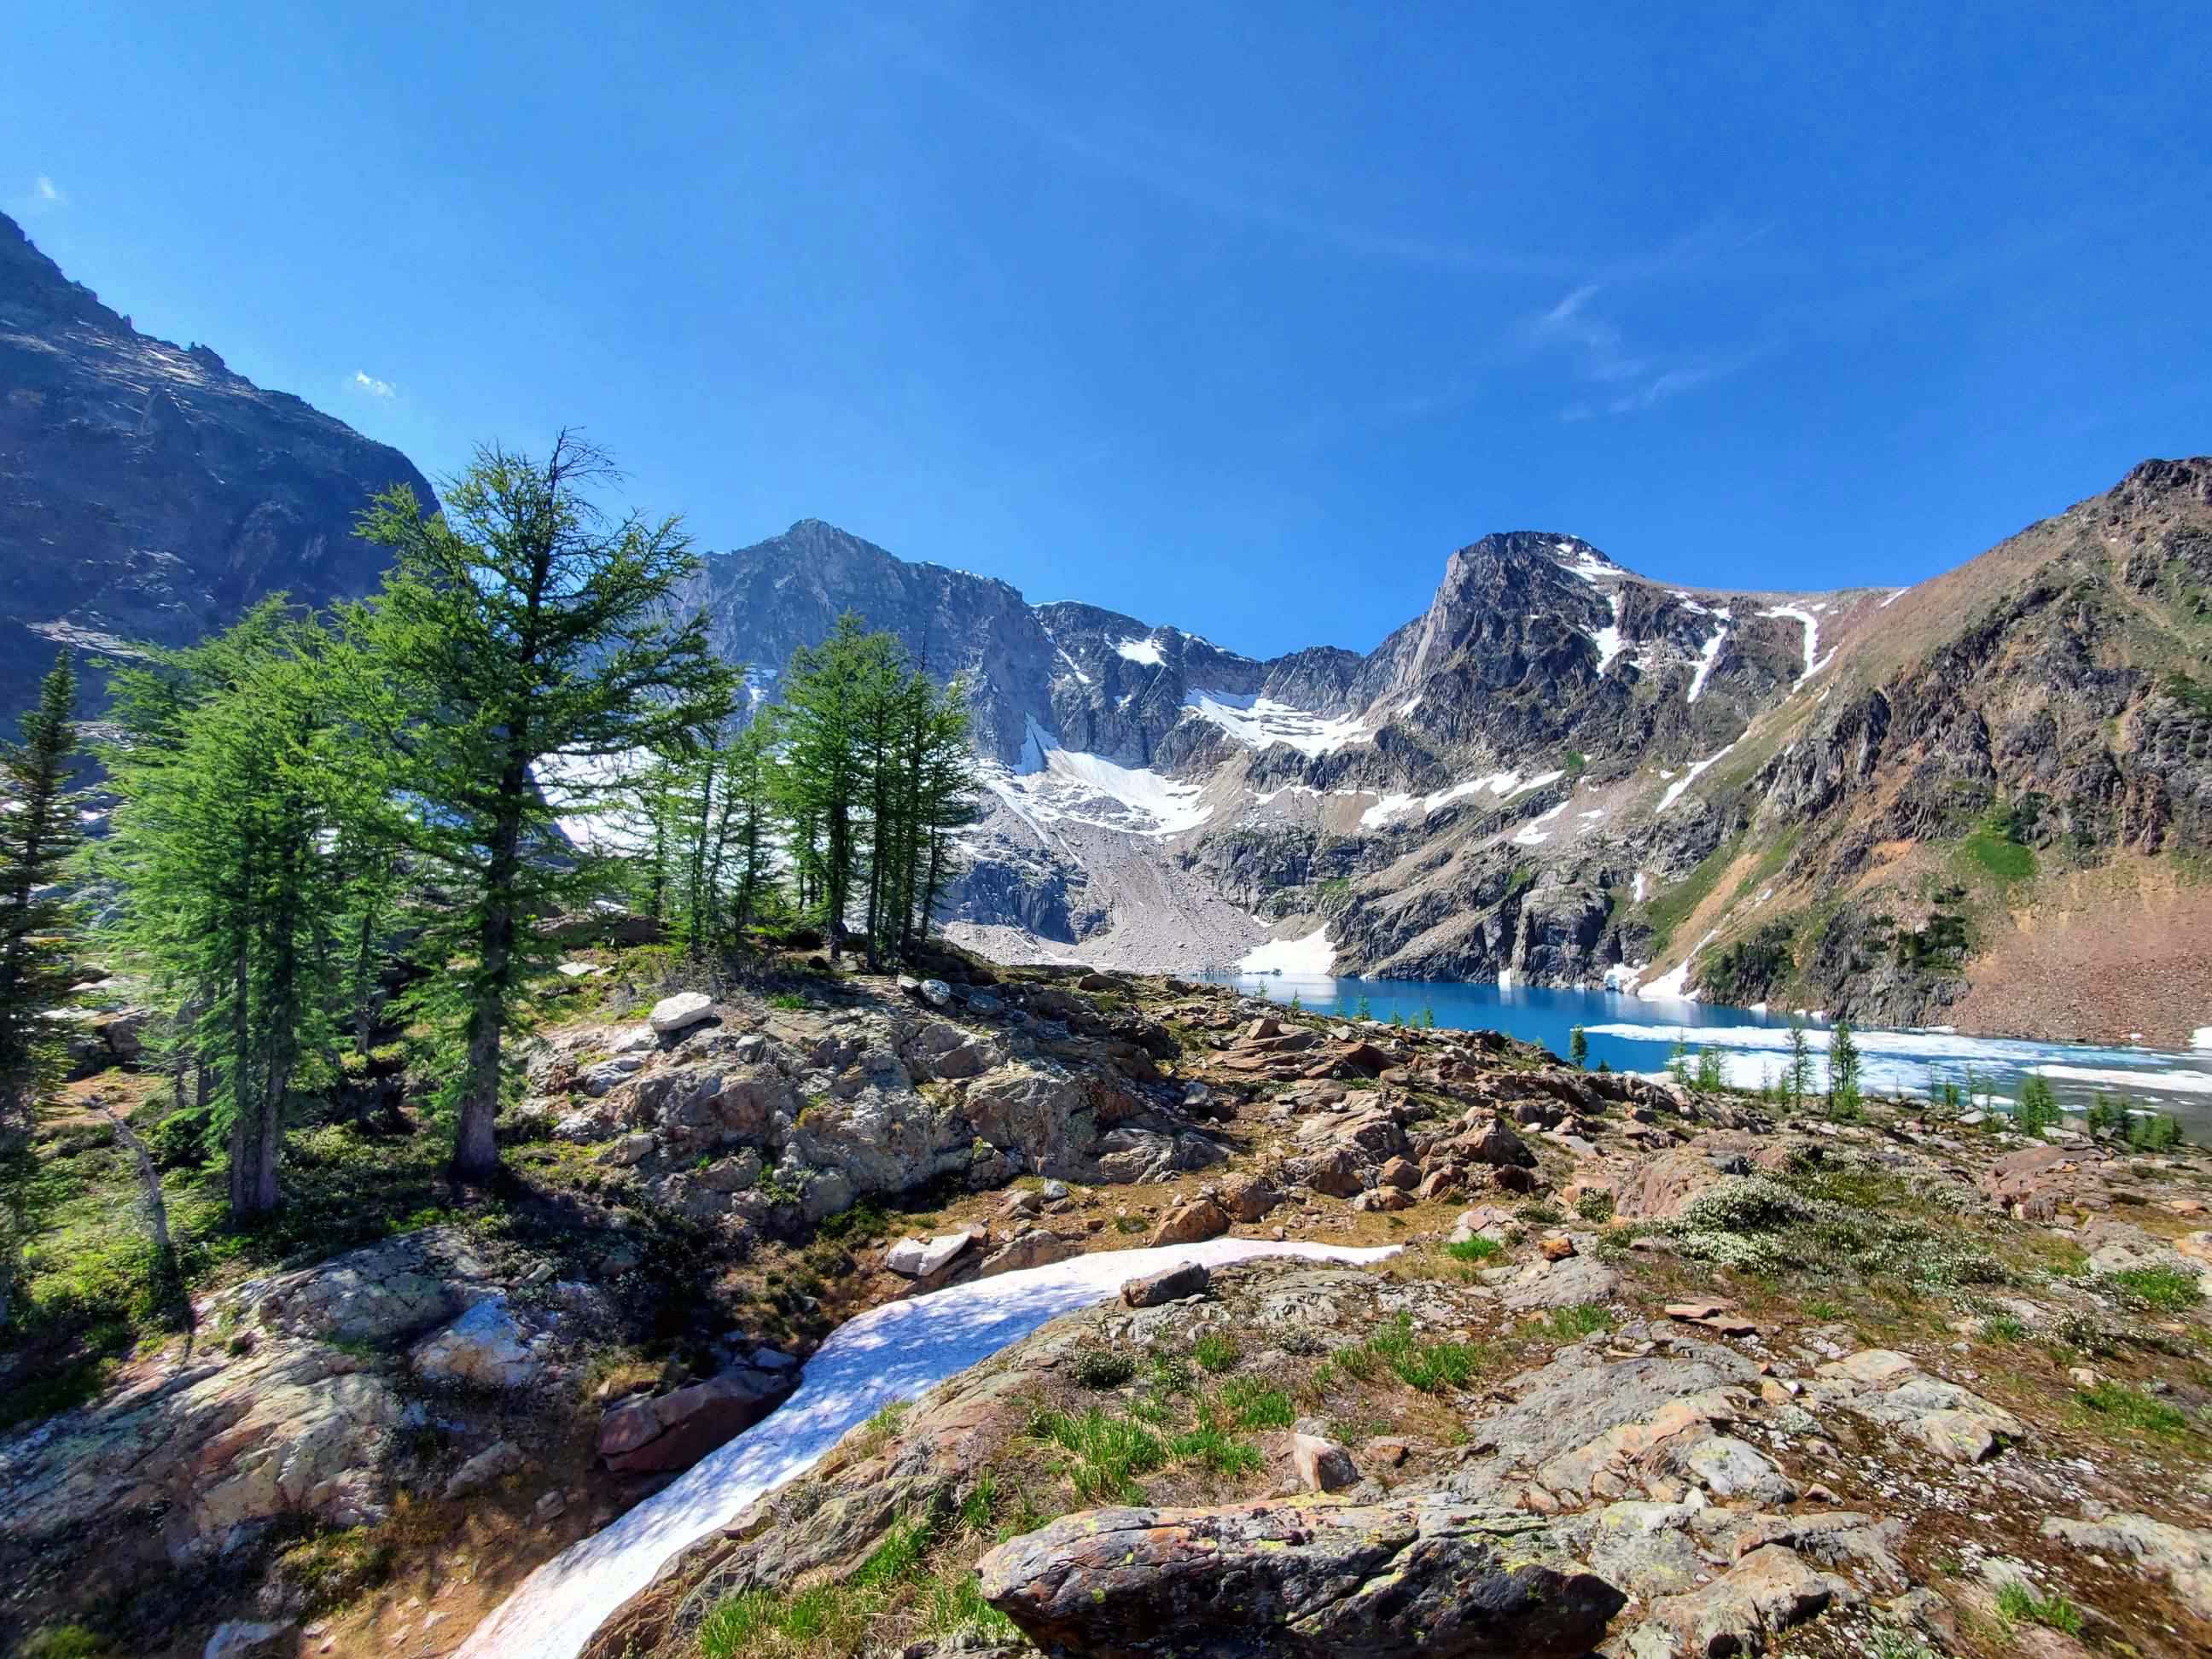 Nature scene: Rocky Mountains, trees, lake, rocks, snow, blue sky